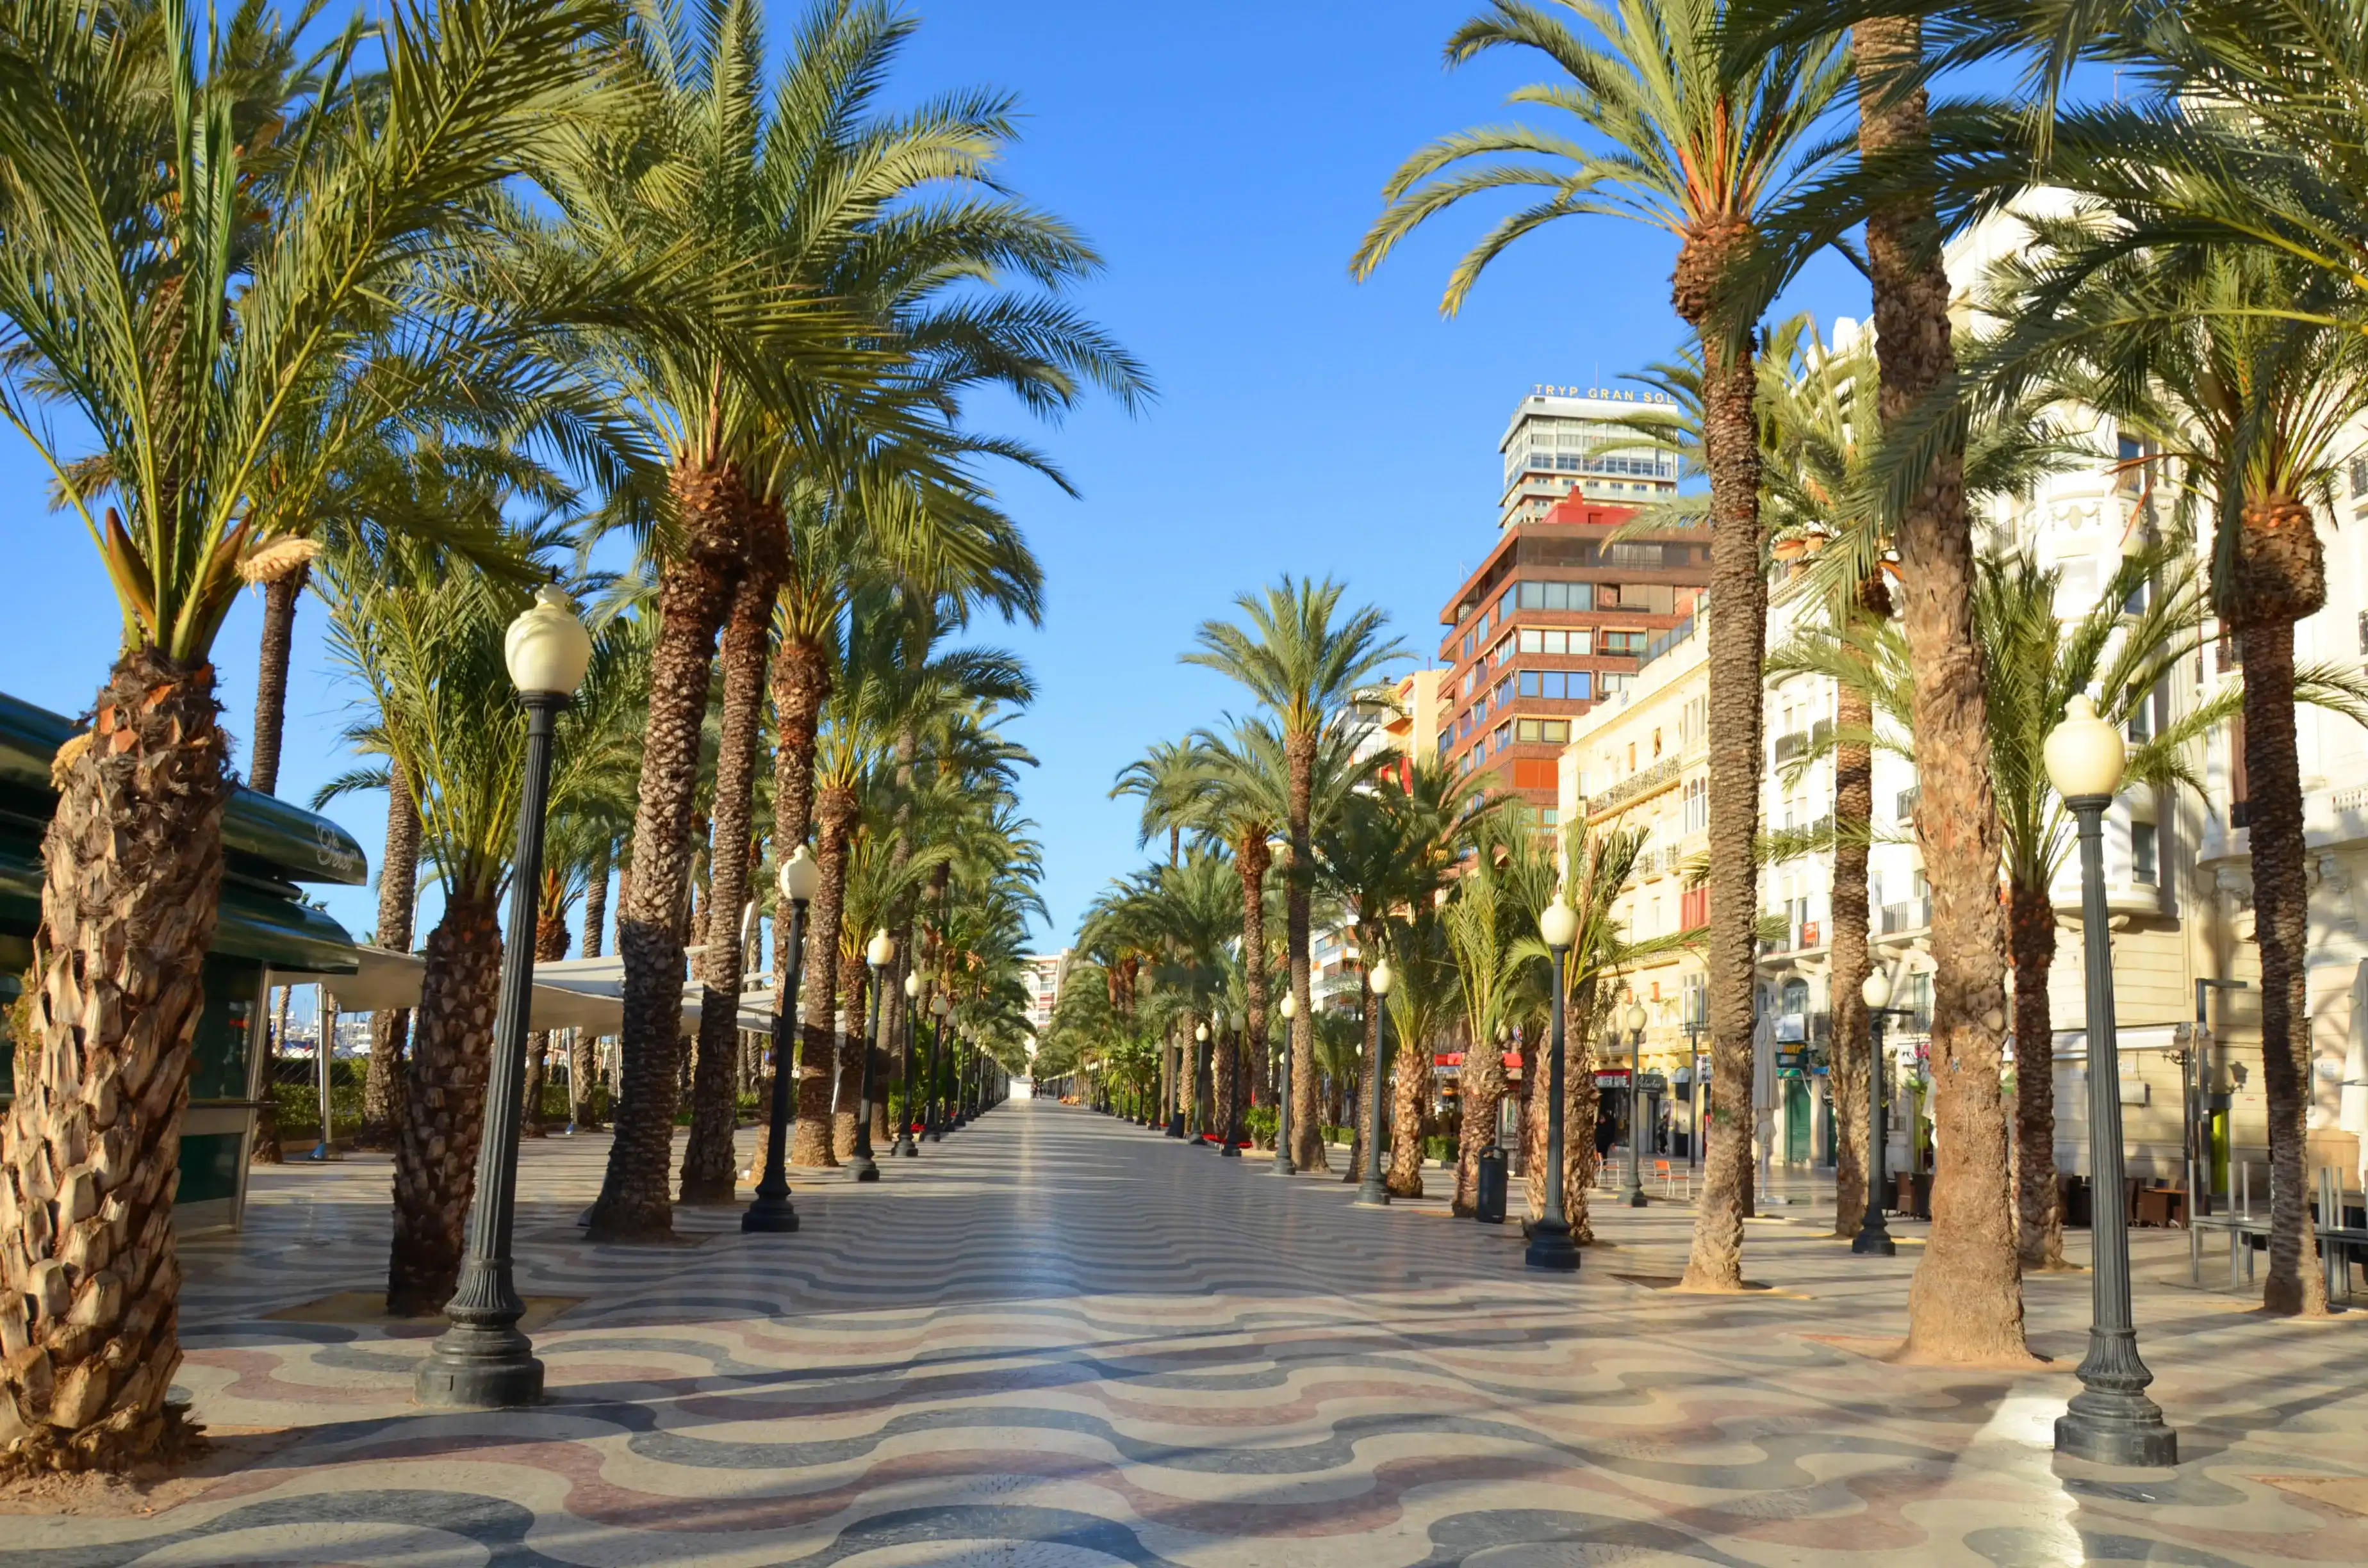 Best Alicante hotels. Cheap hotels in Alicante, Spain